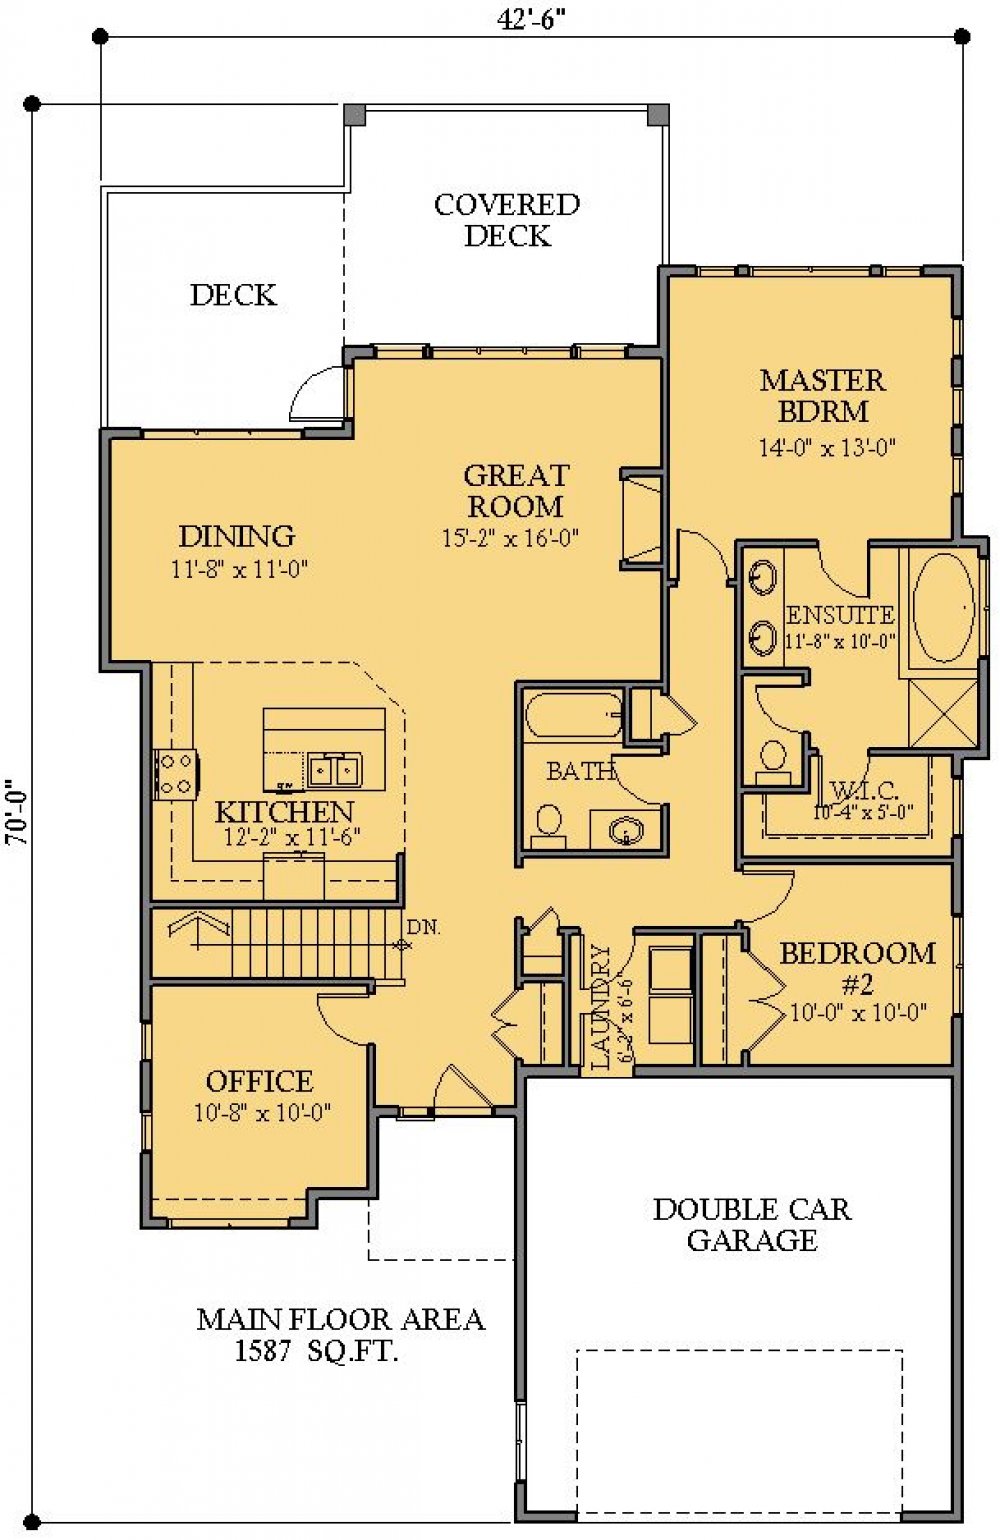 House Plan E1731-50 Main Floor Plan